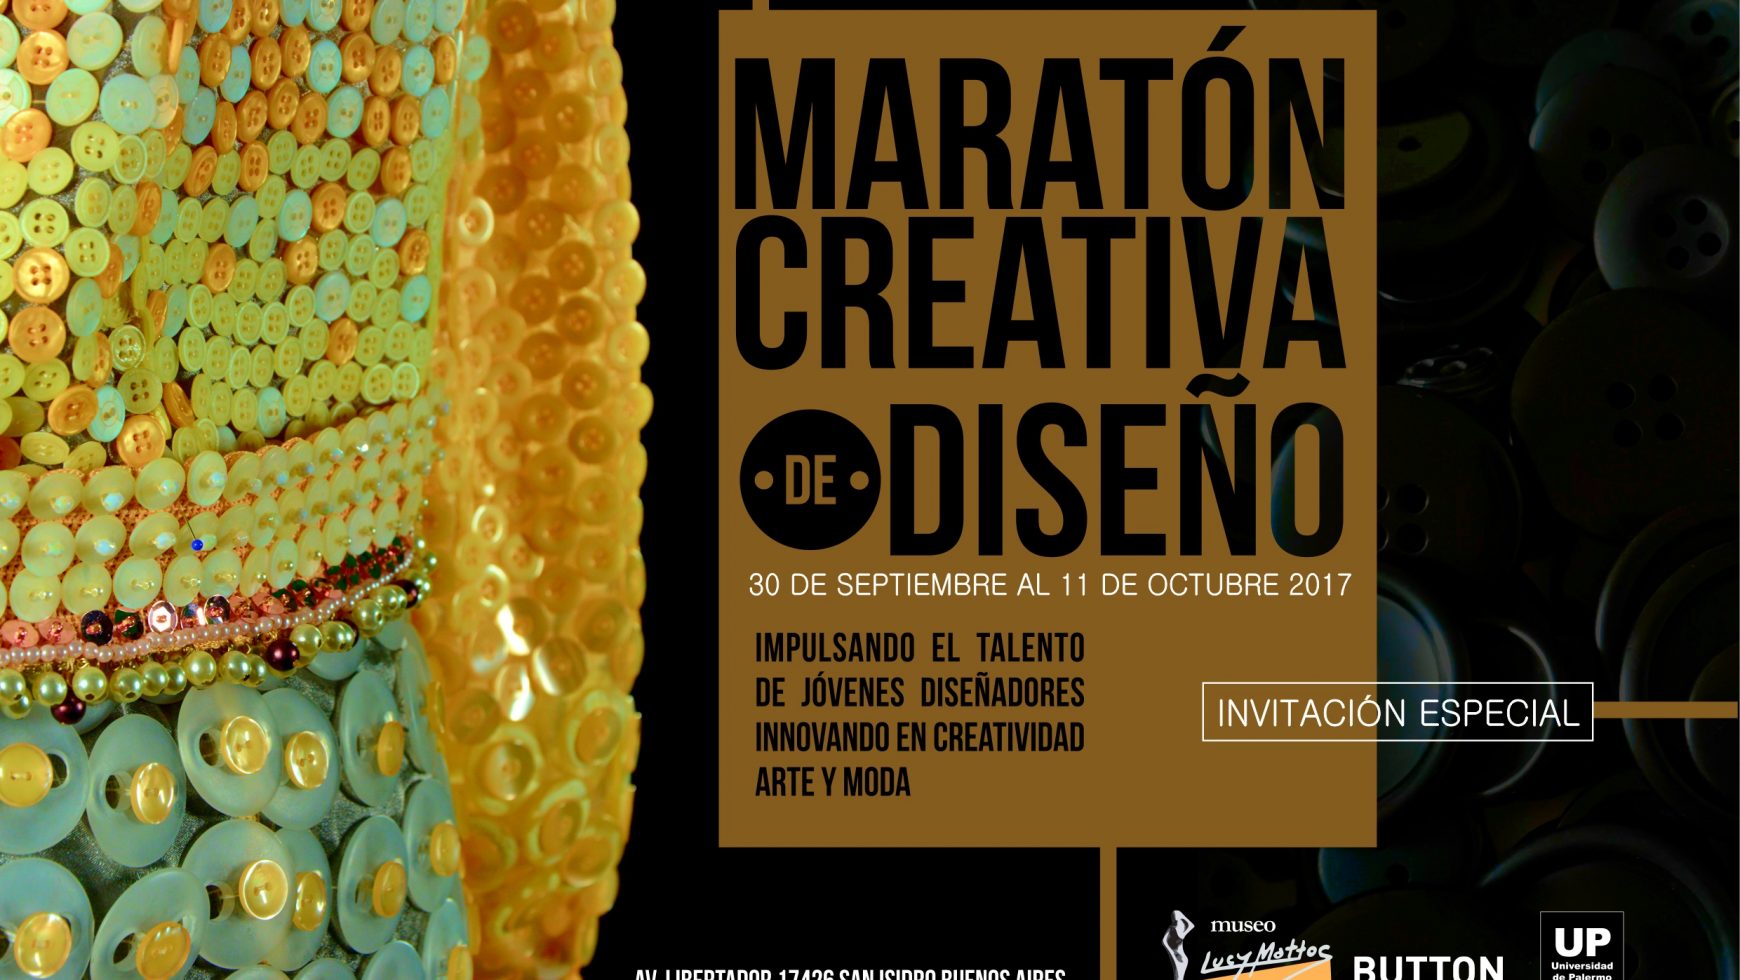 Maratón Creativa de Diseño | 30 de Septiembre 2017